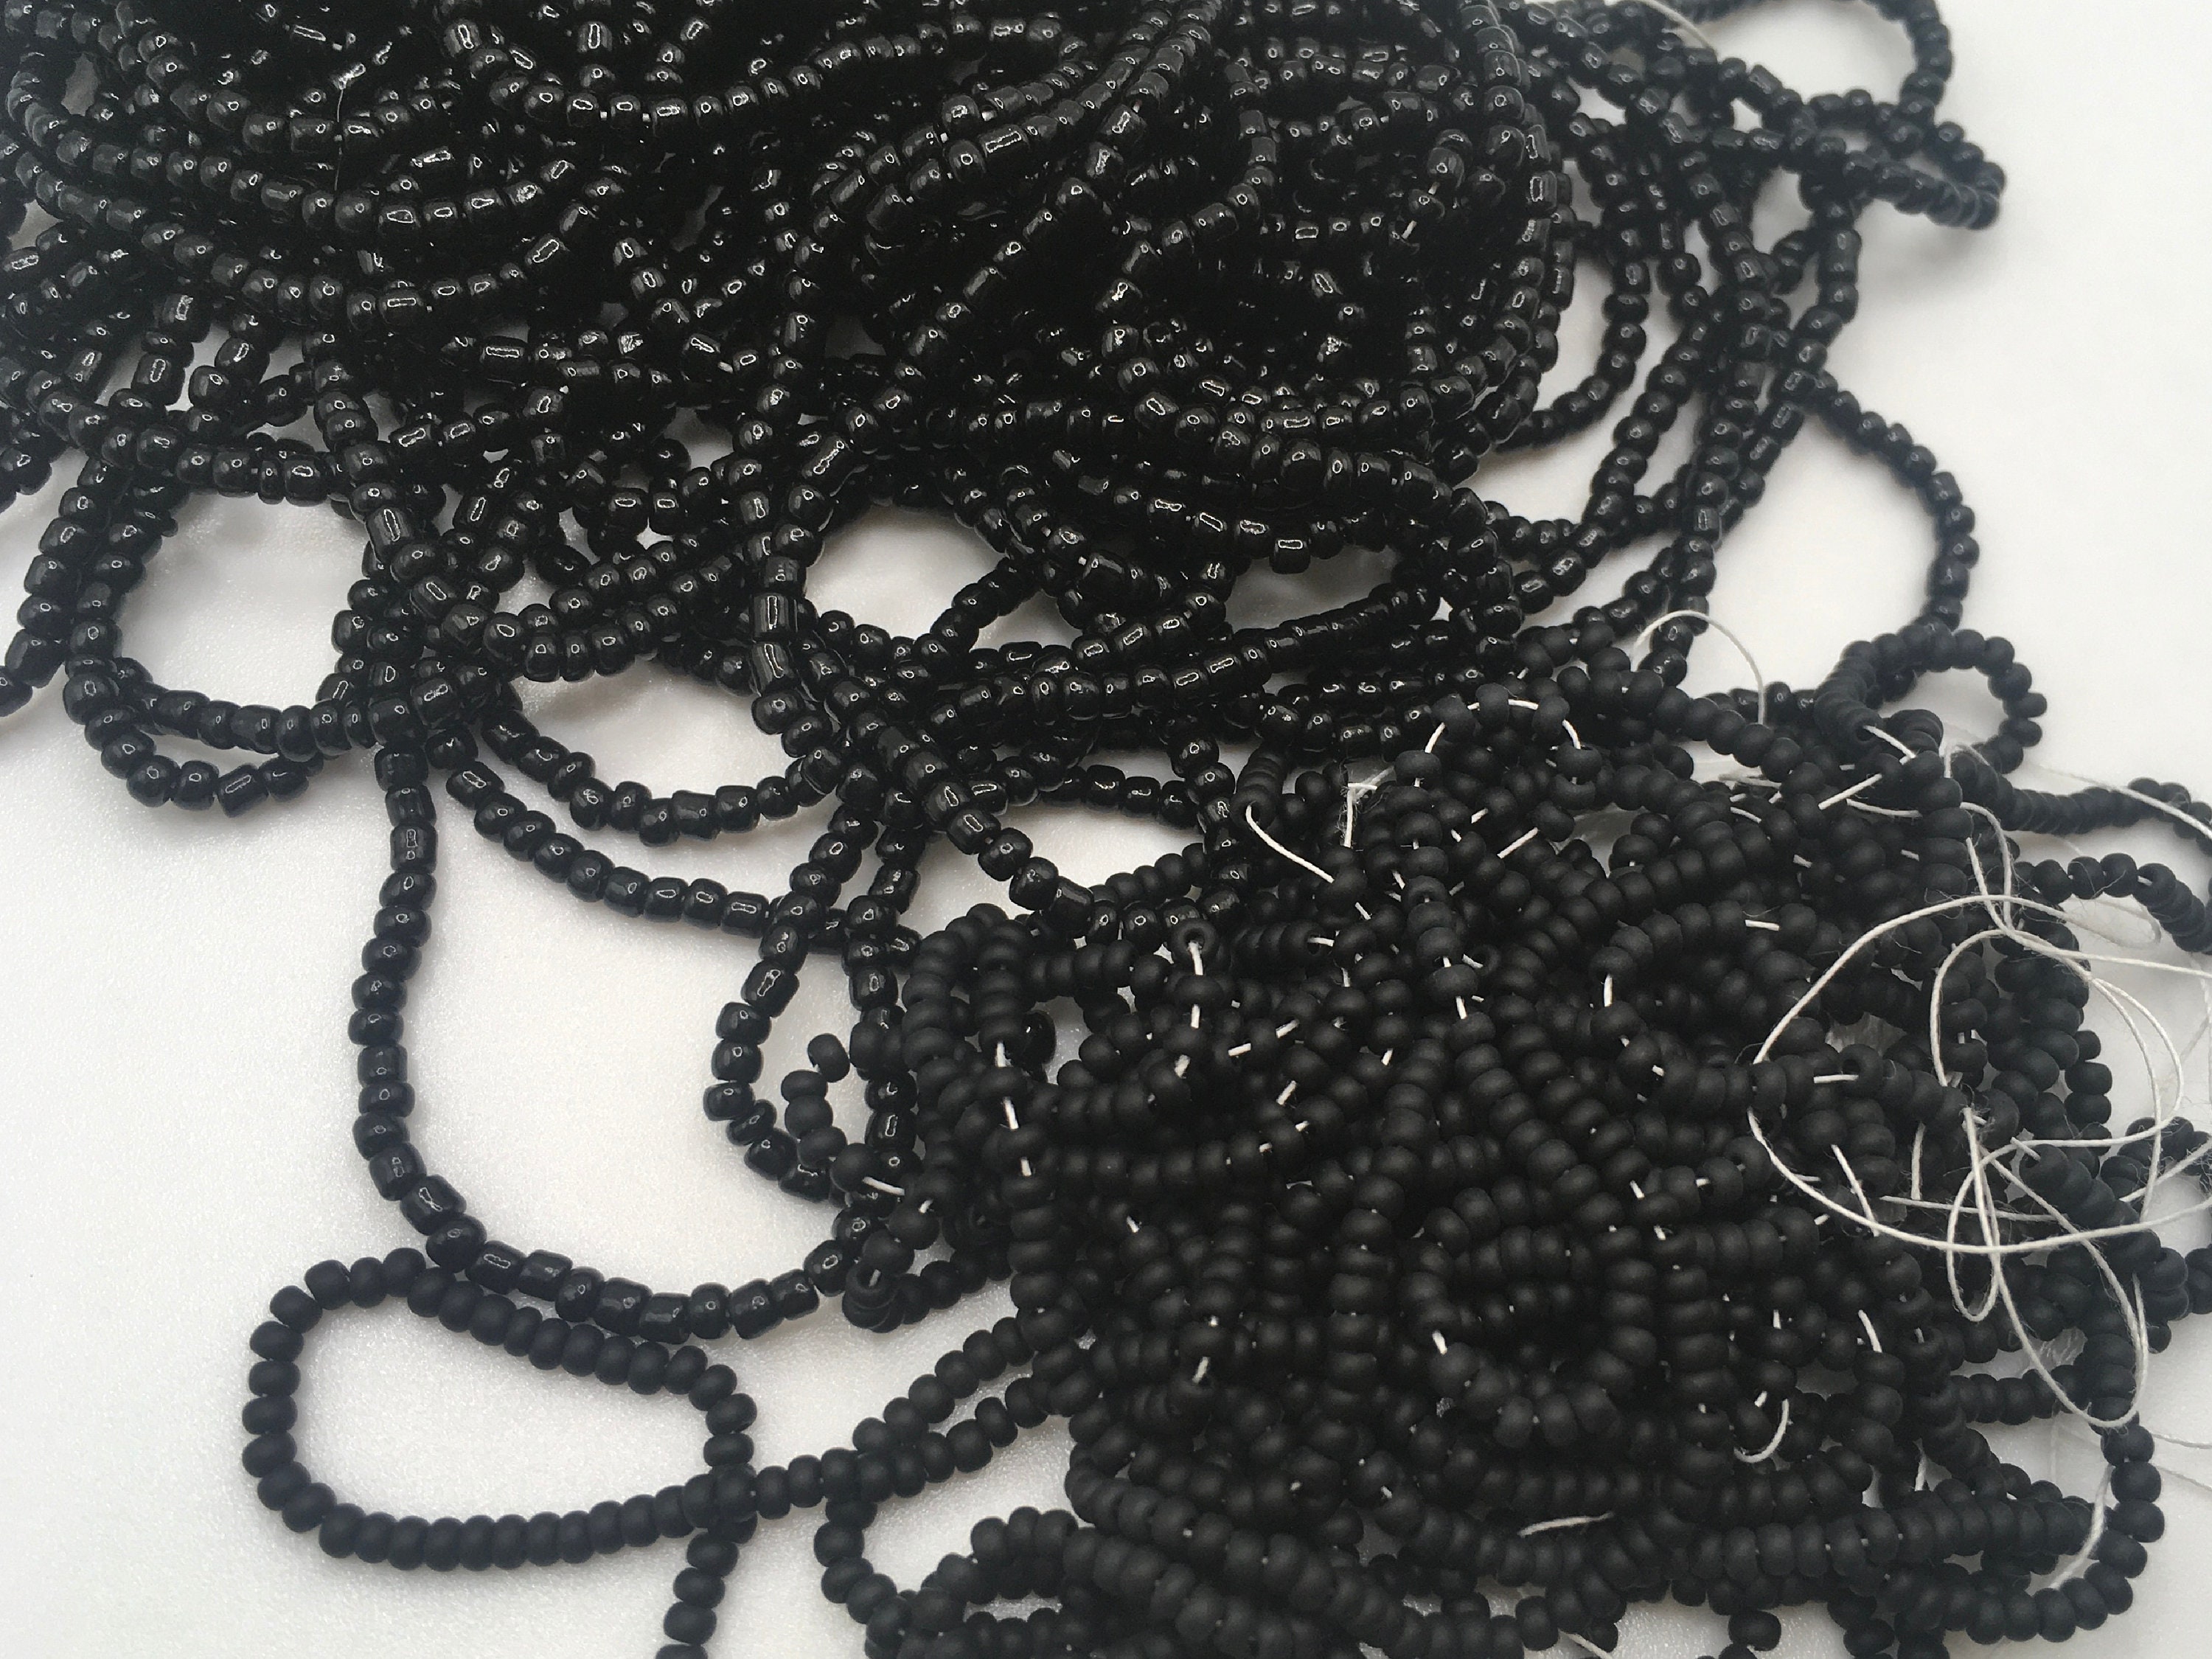 Super Tiny Black Seed Bead Necklace / Choker, Tiny Black Opaque